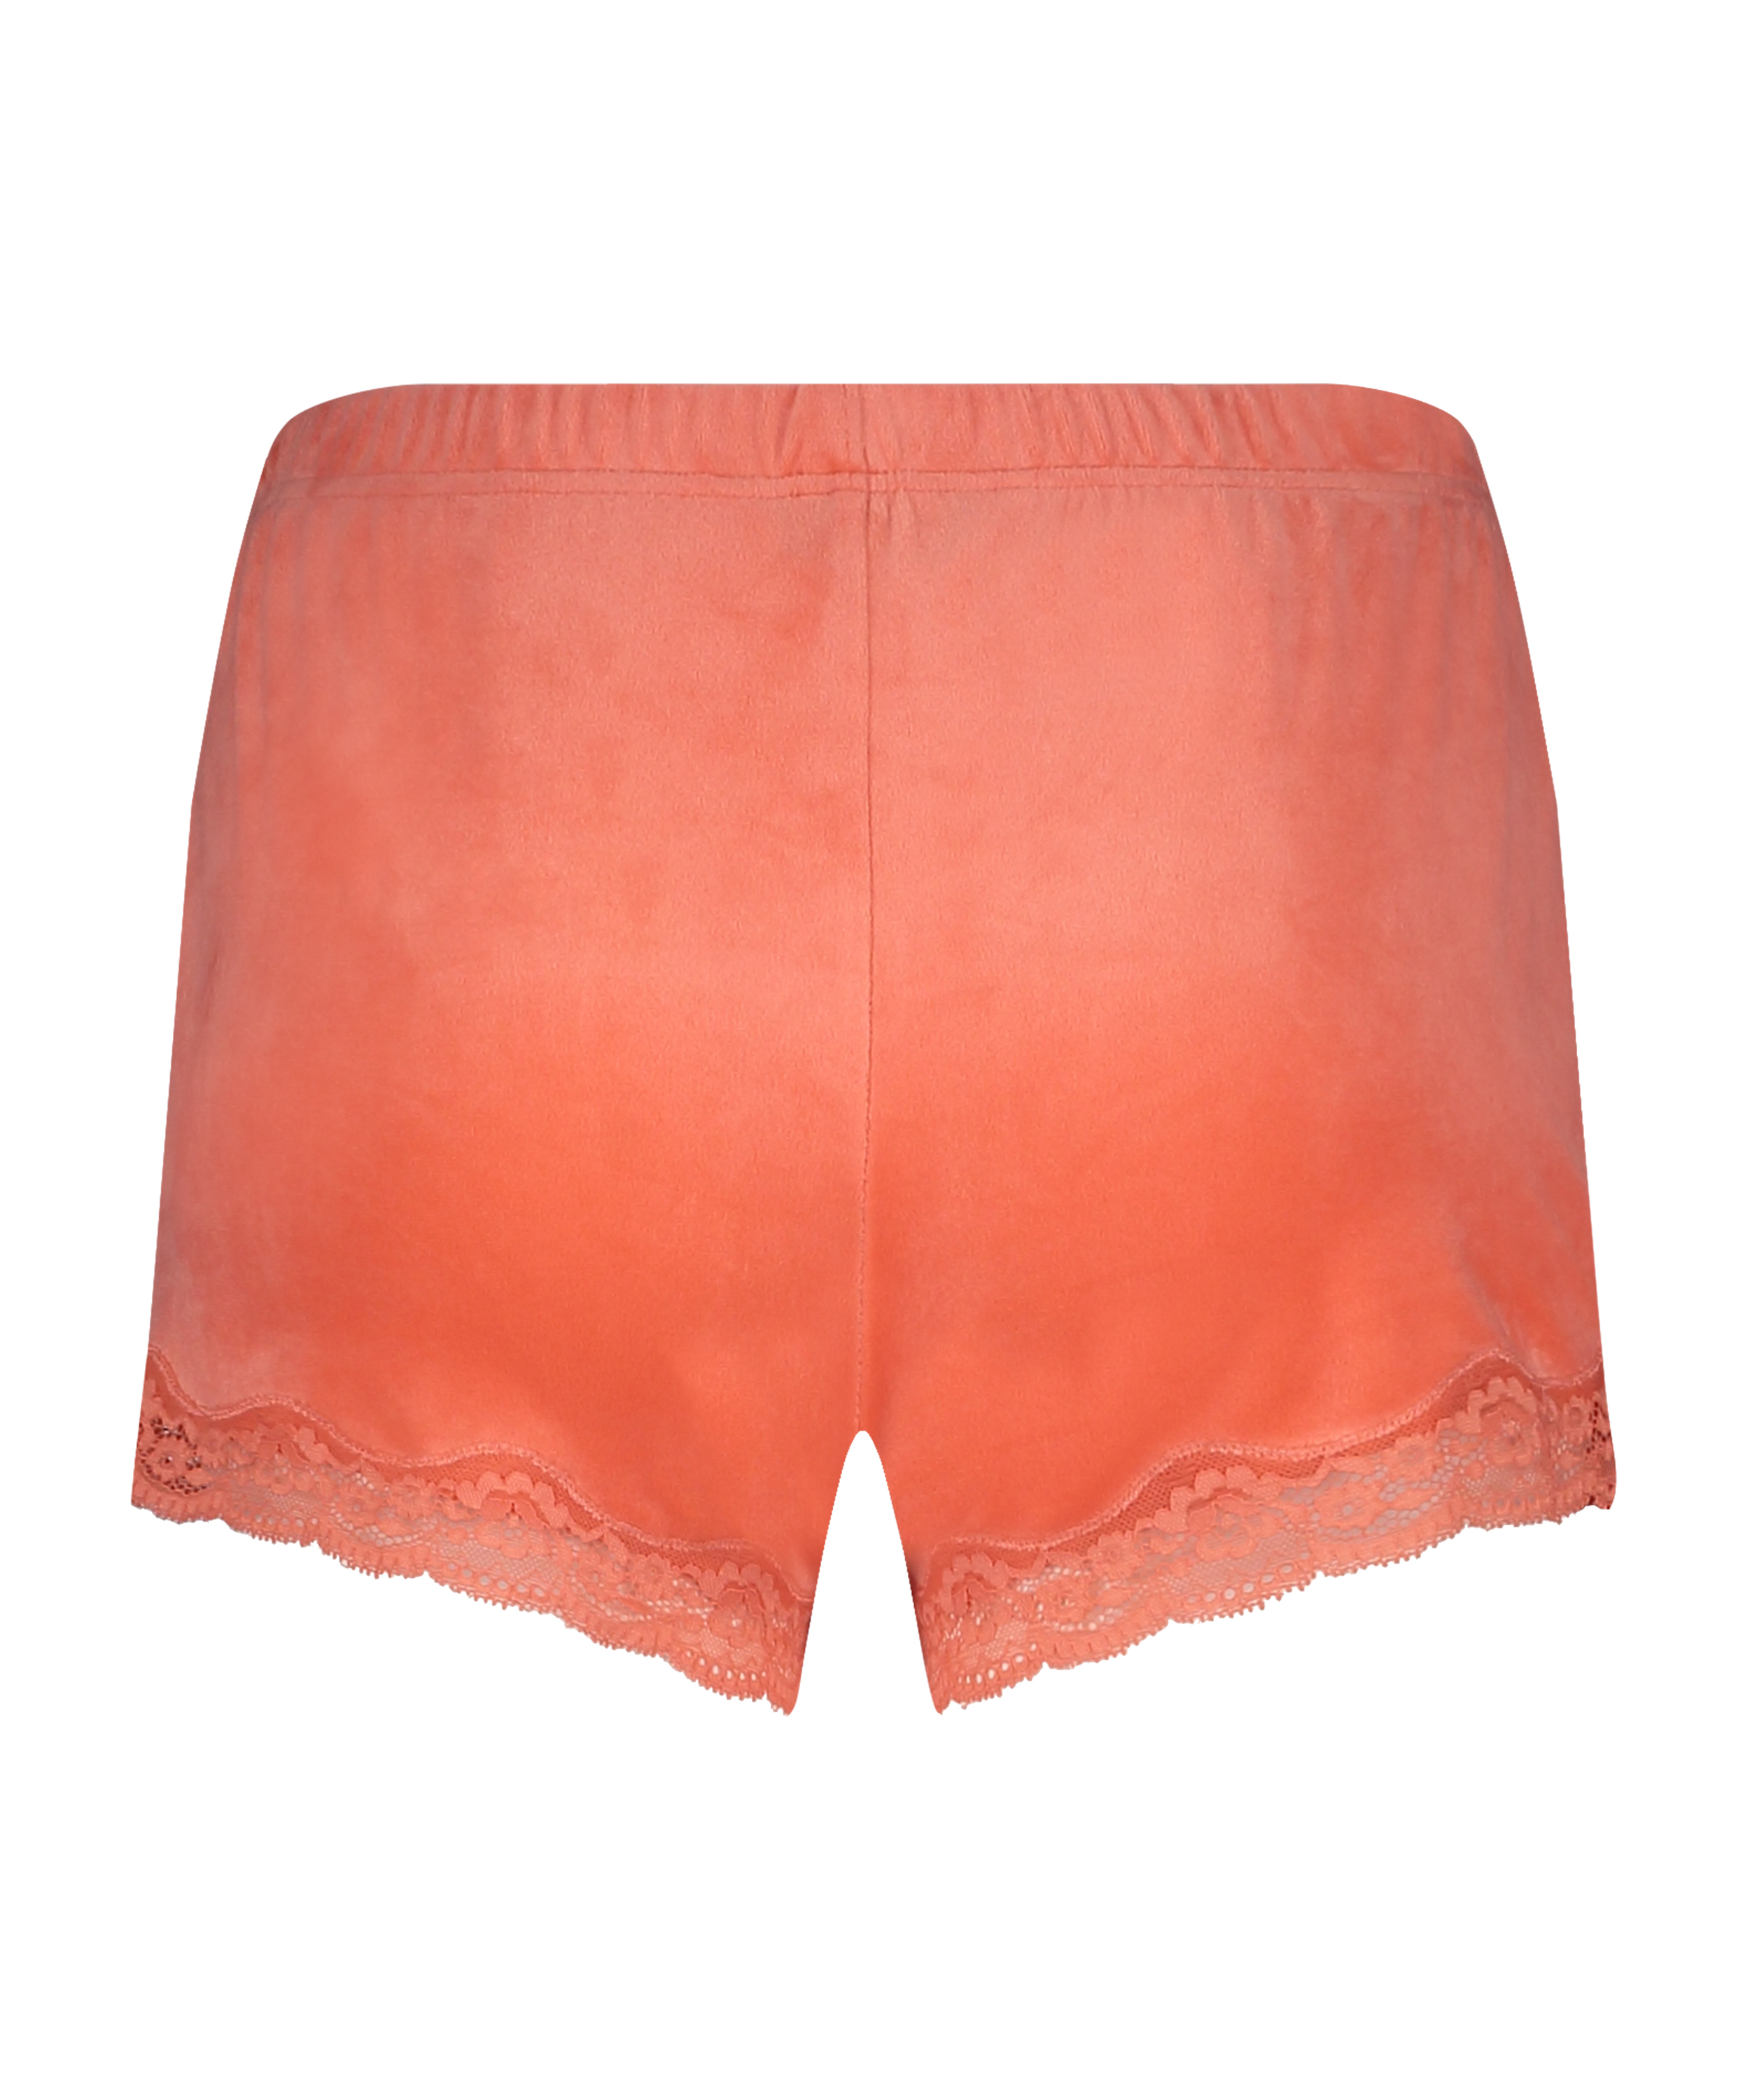 Pantalón corto de terciopelo y encaje, Naranja, main